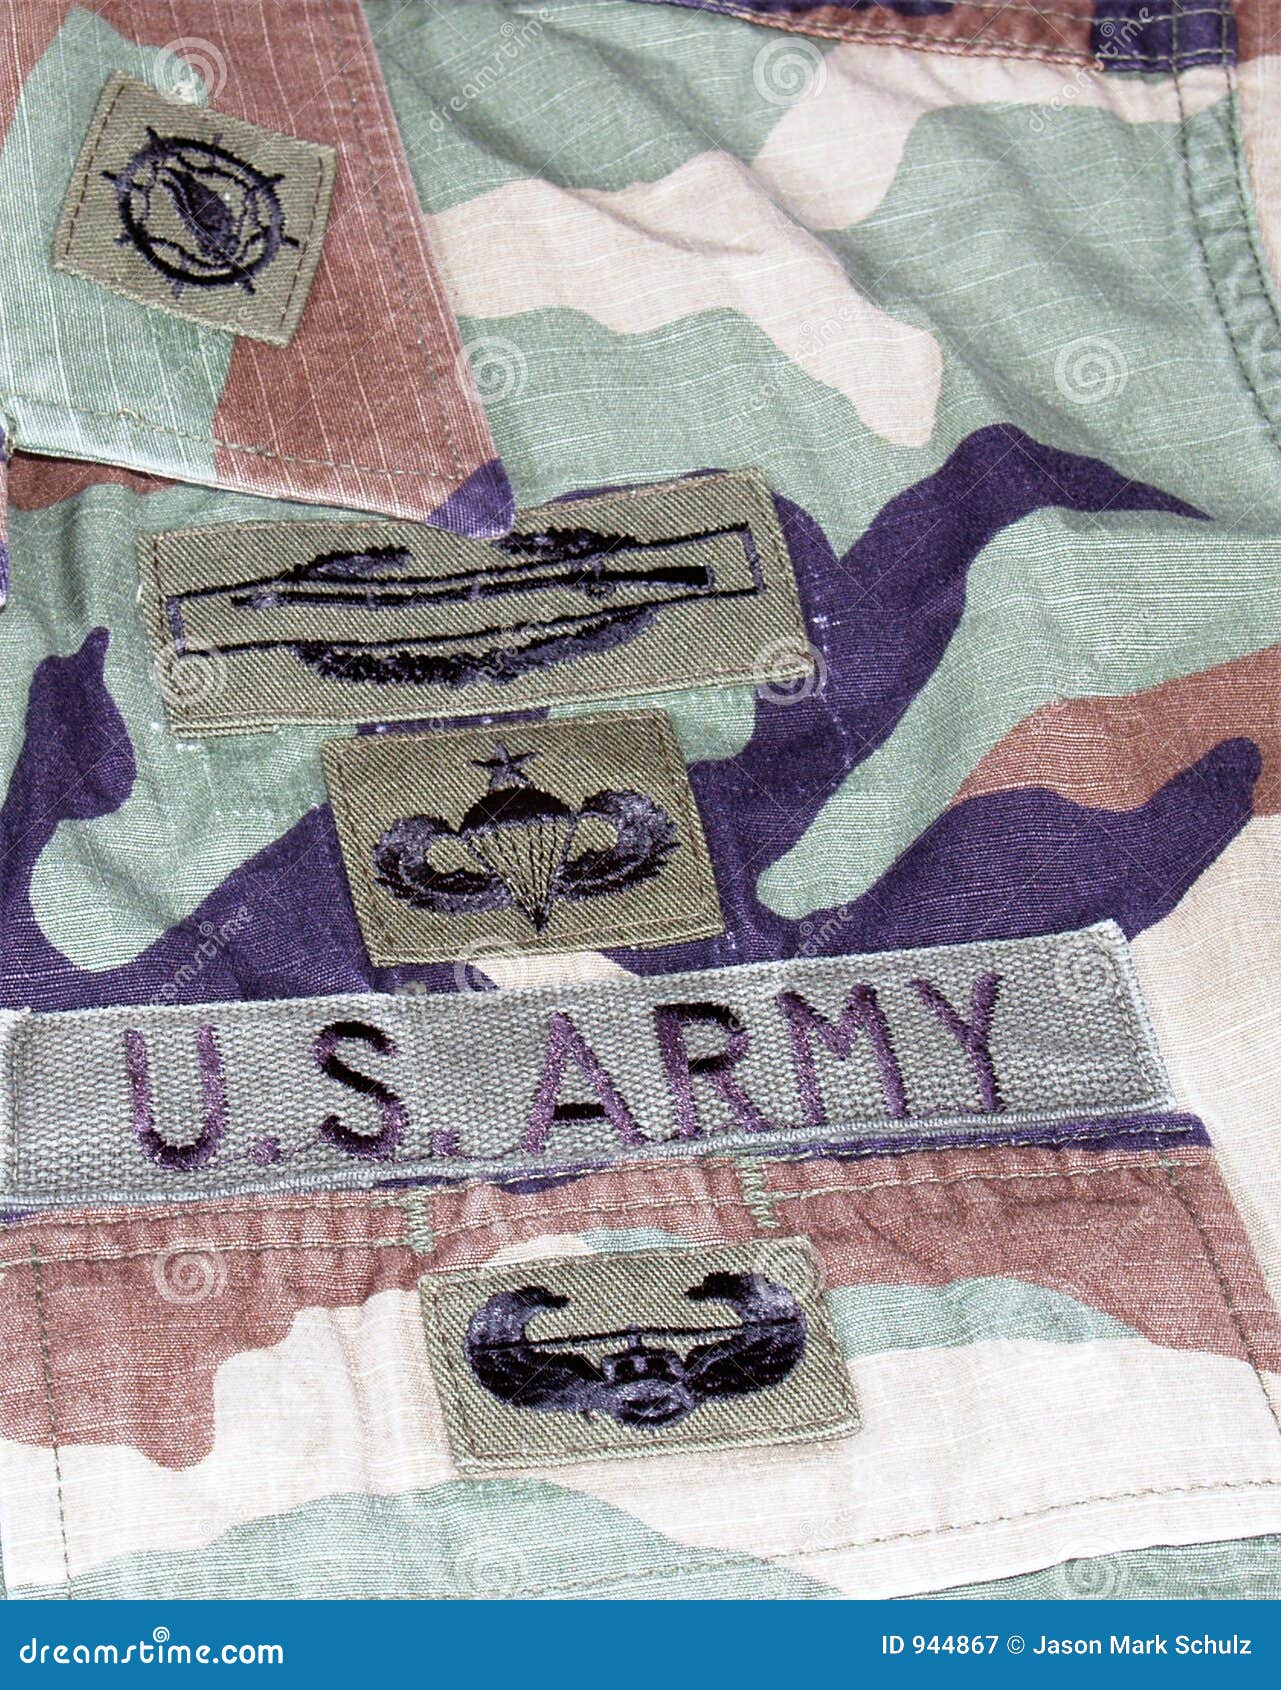 us army combat veteran uniform patches